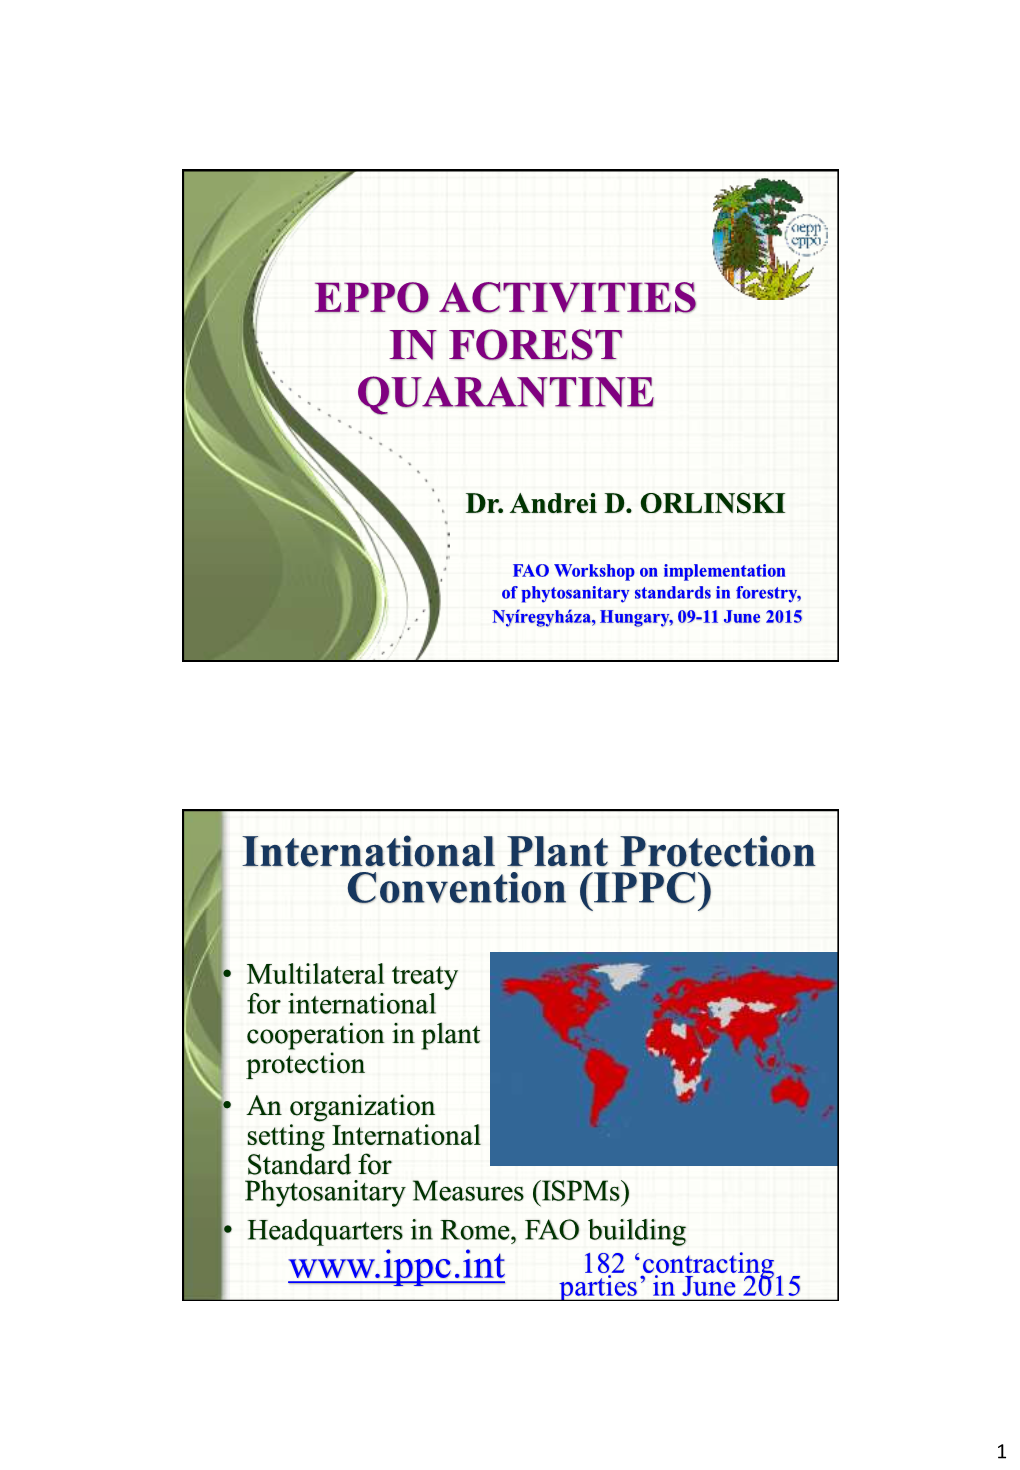 European and Mediterranean Plant Protection